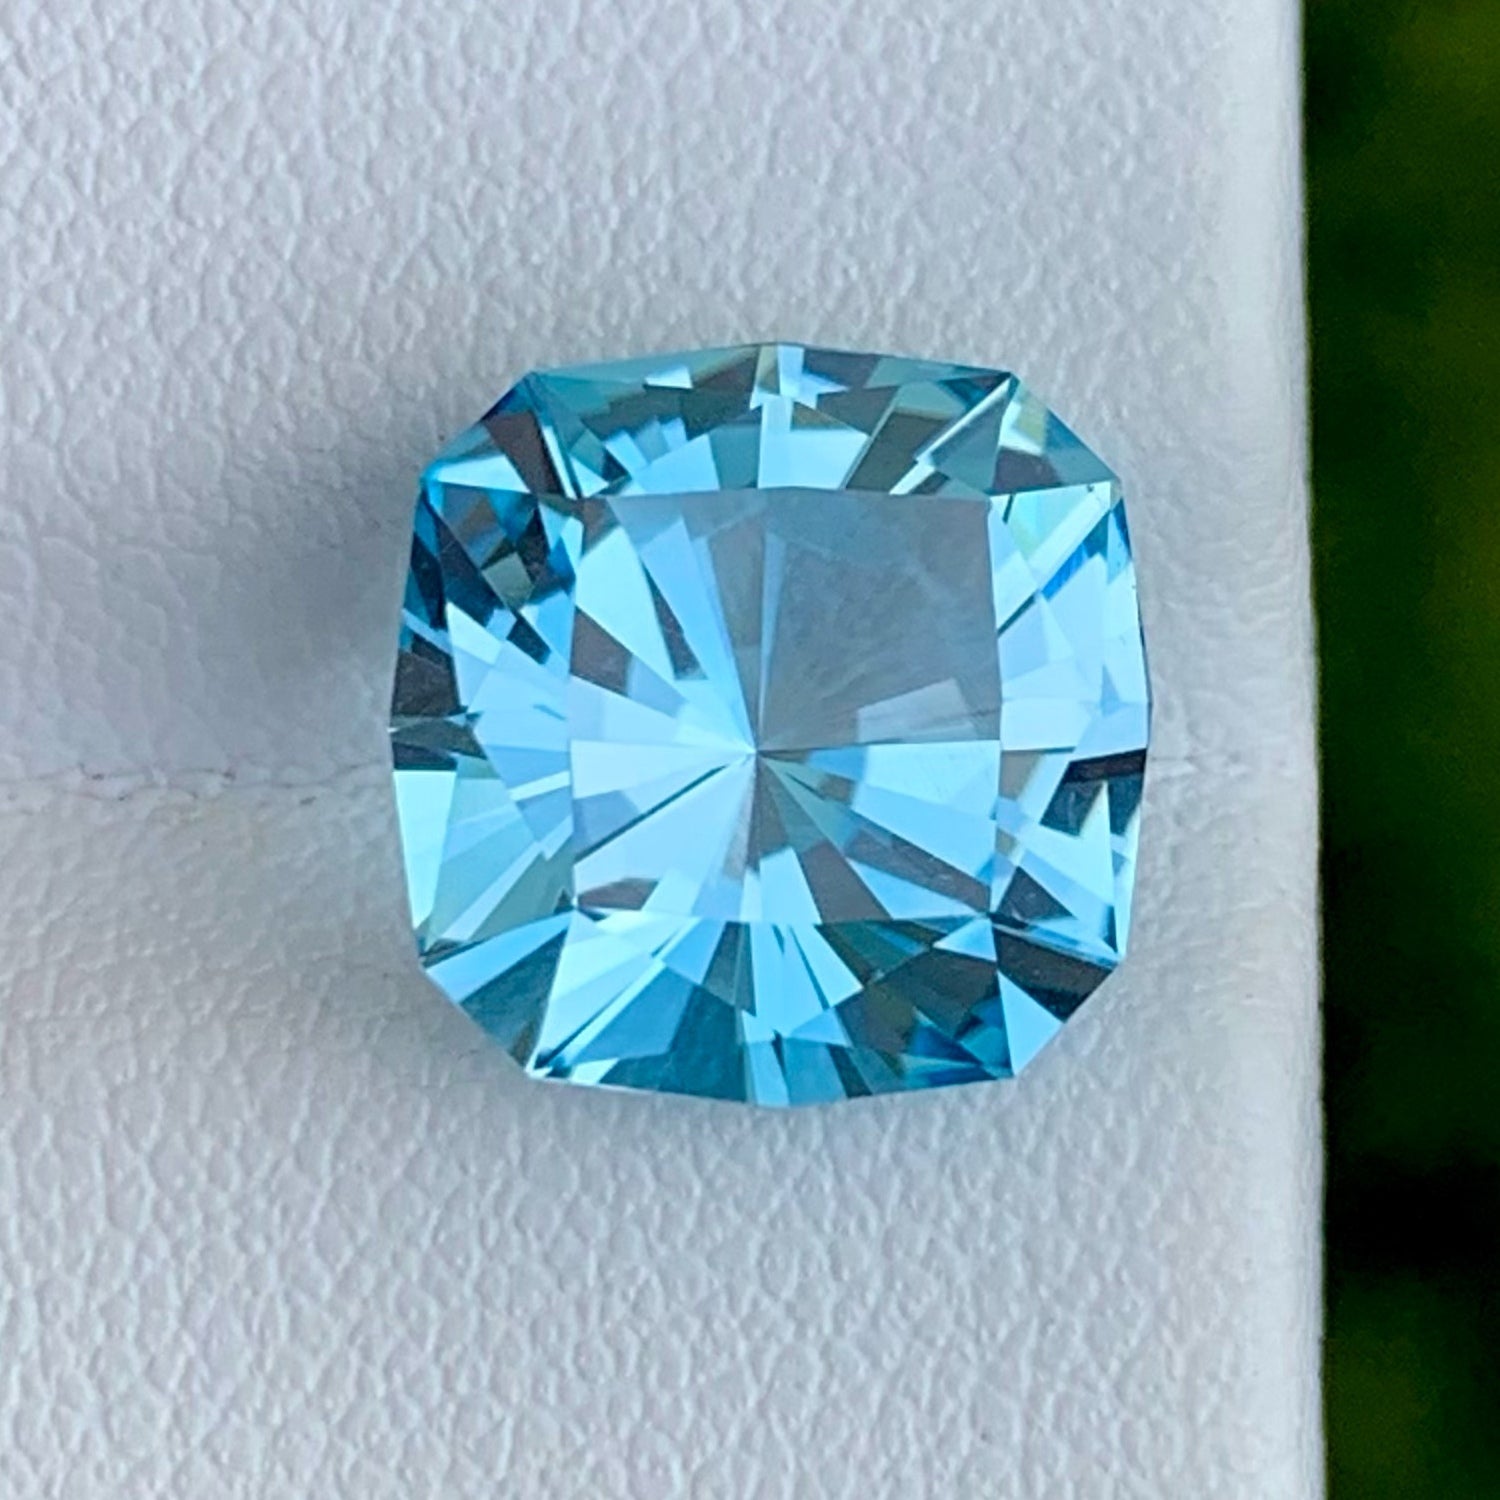 Beautiful Swiss Blue Loose Topaz Gemstone